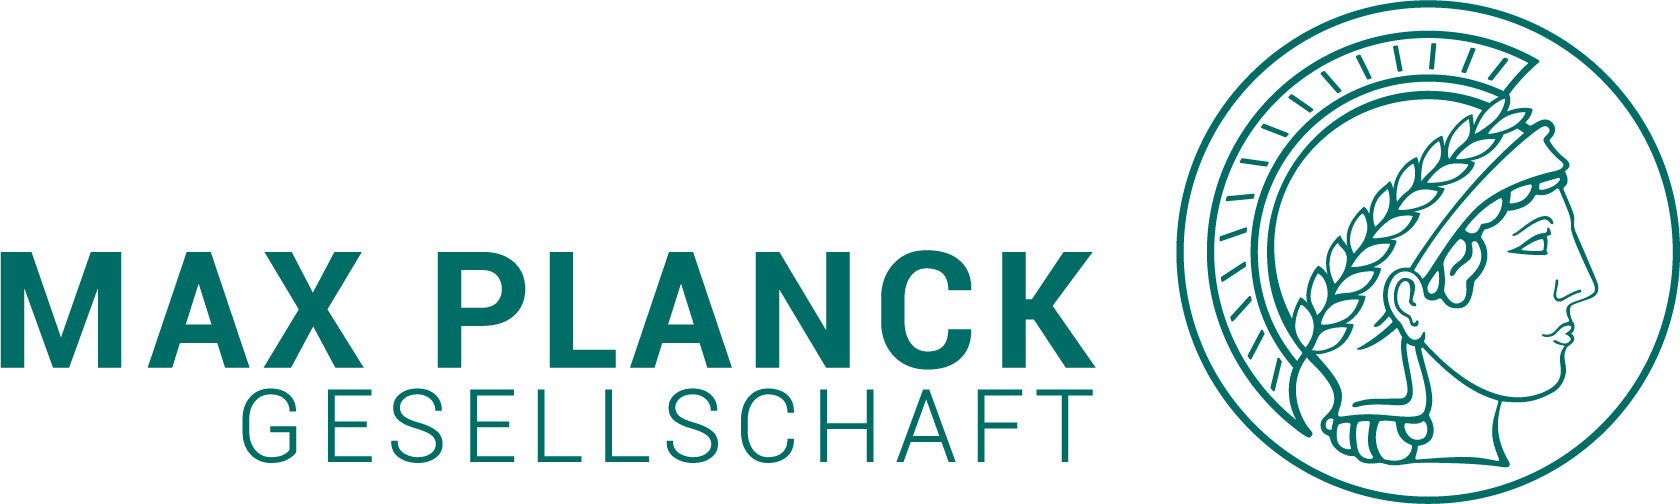 Max-Planck-Gesellschaft